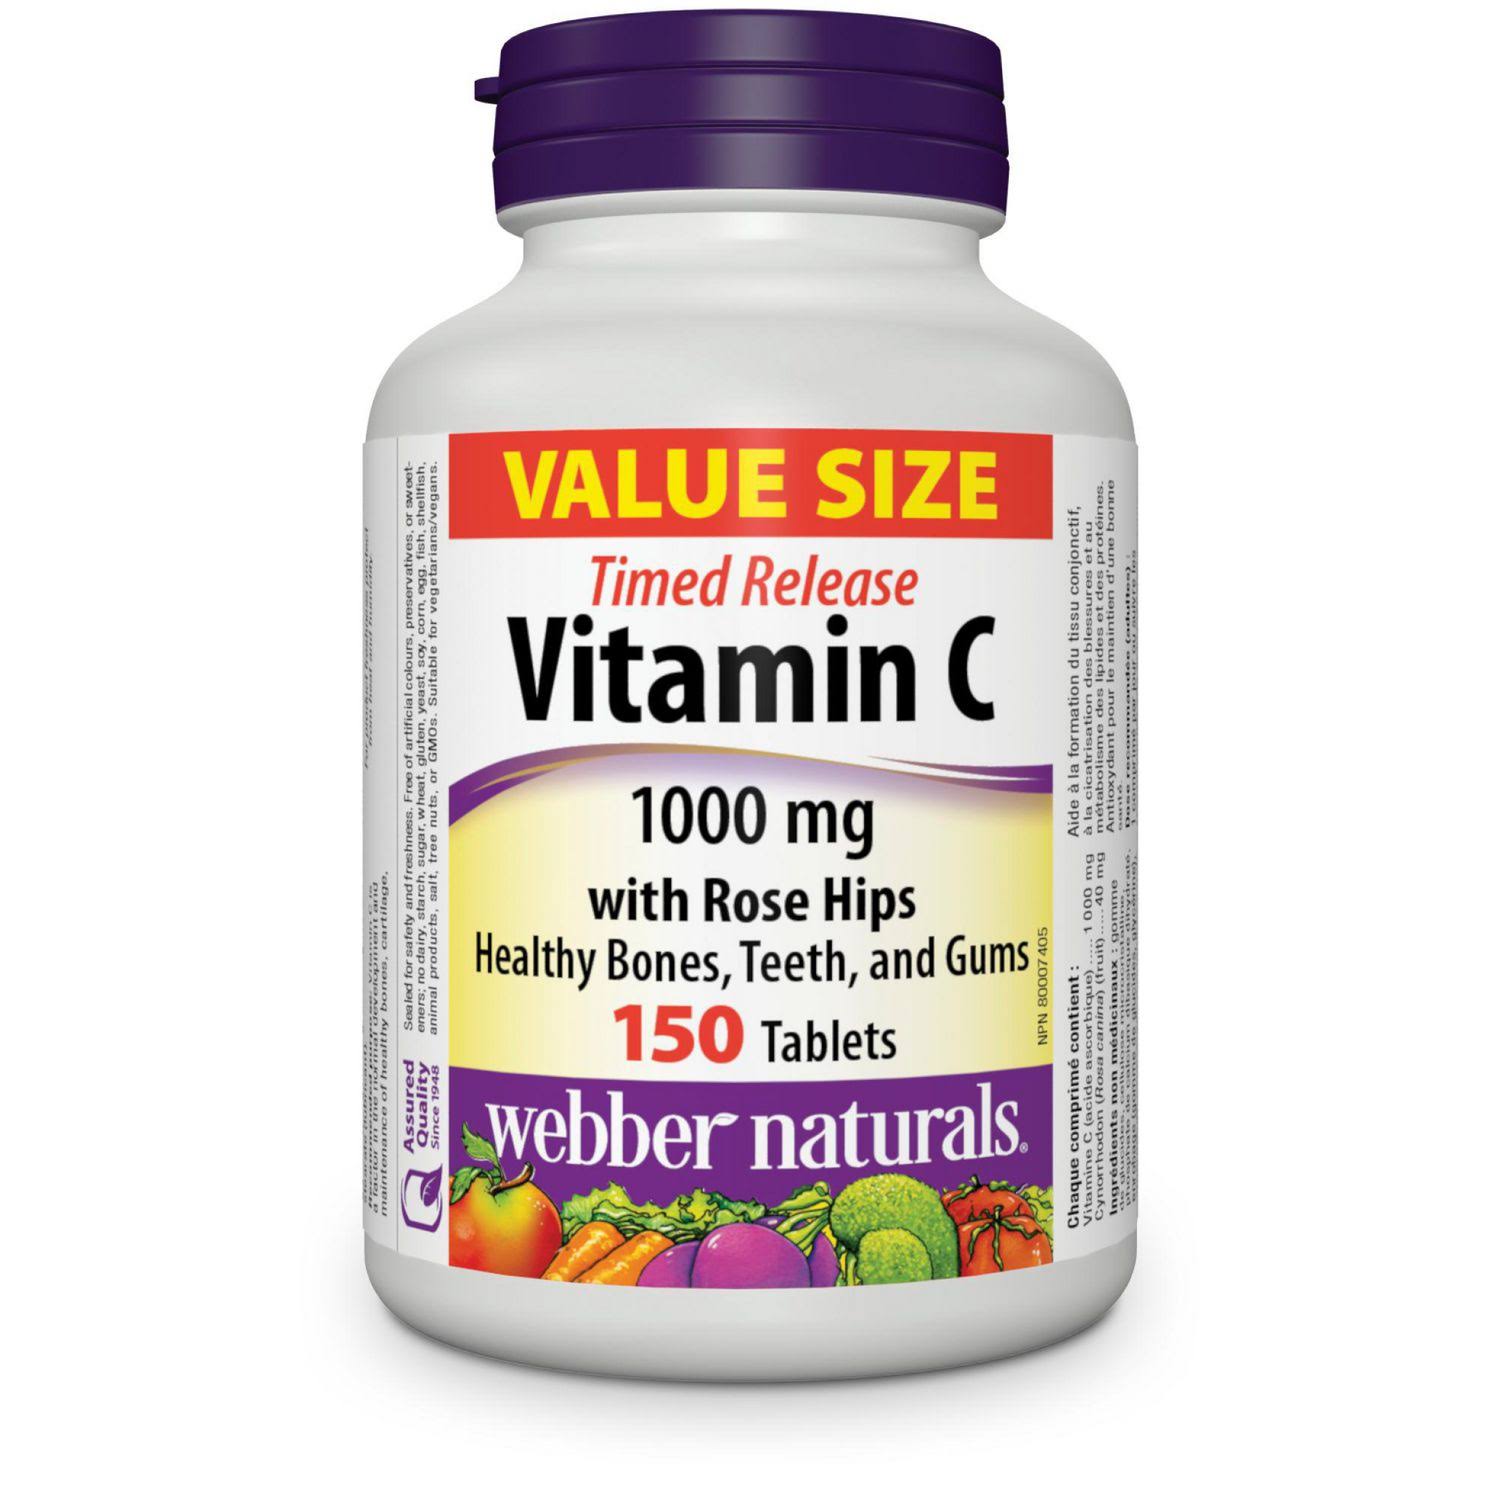 Webber Naturals Vitamin C Timed Release Supplement - 1000mg, 150 Tablets